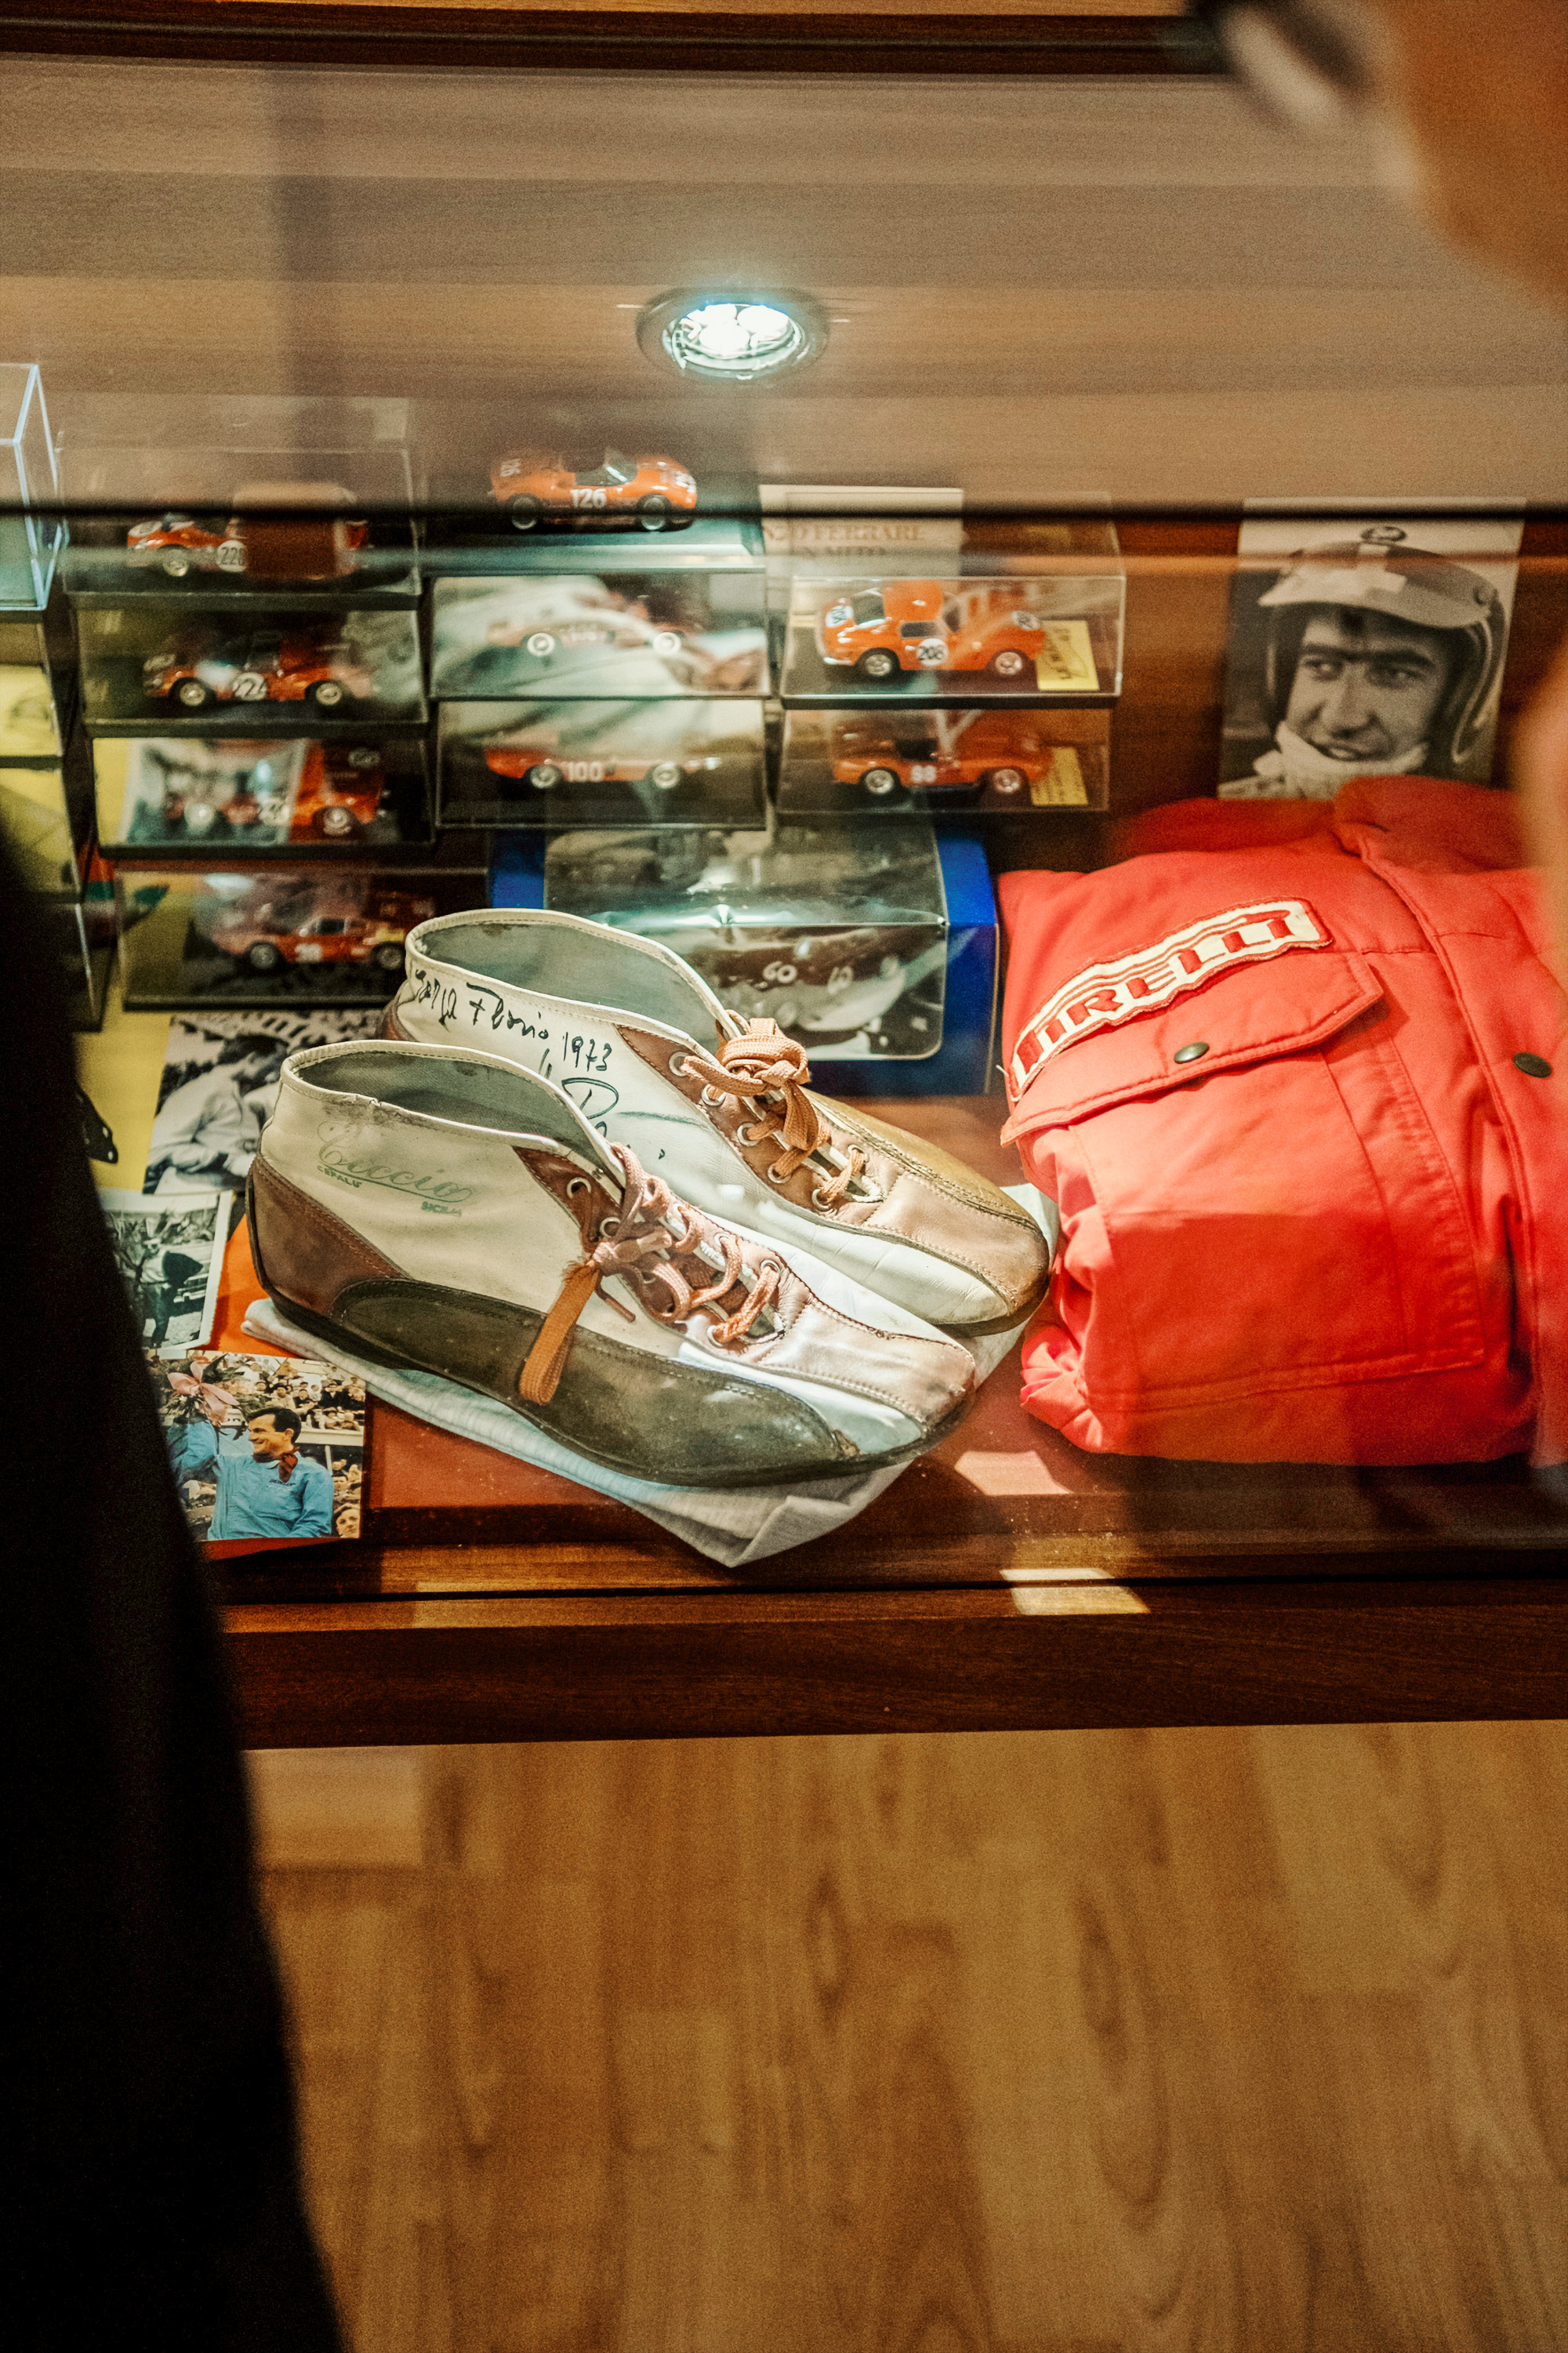 Targa Florio motorsport memorabilia on display in museum display case